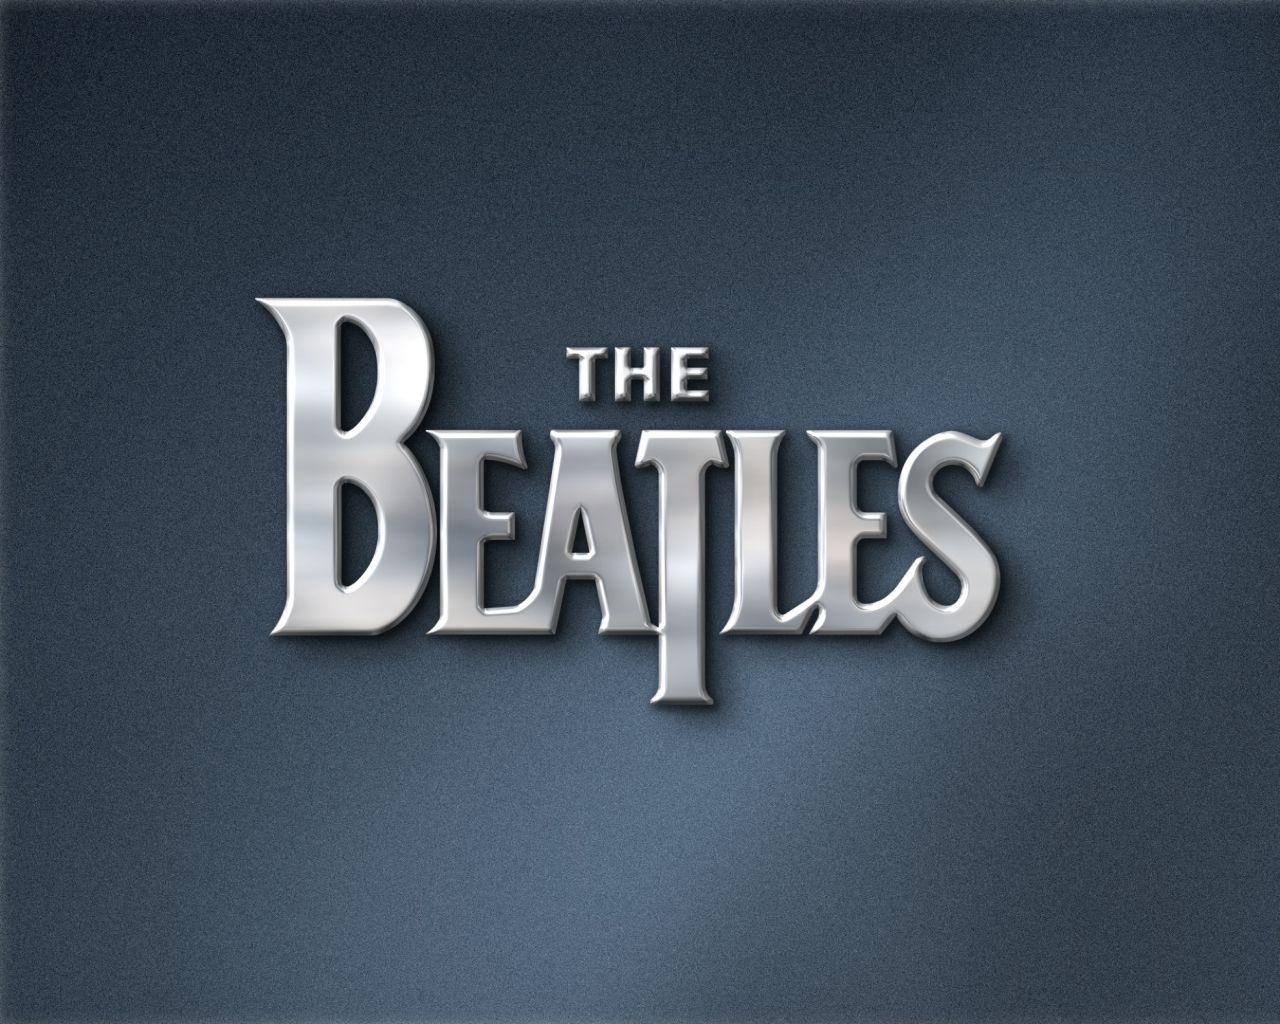 The Beatles Wallpaper HD Download